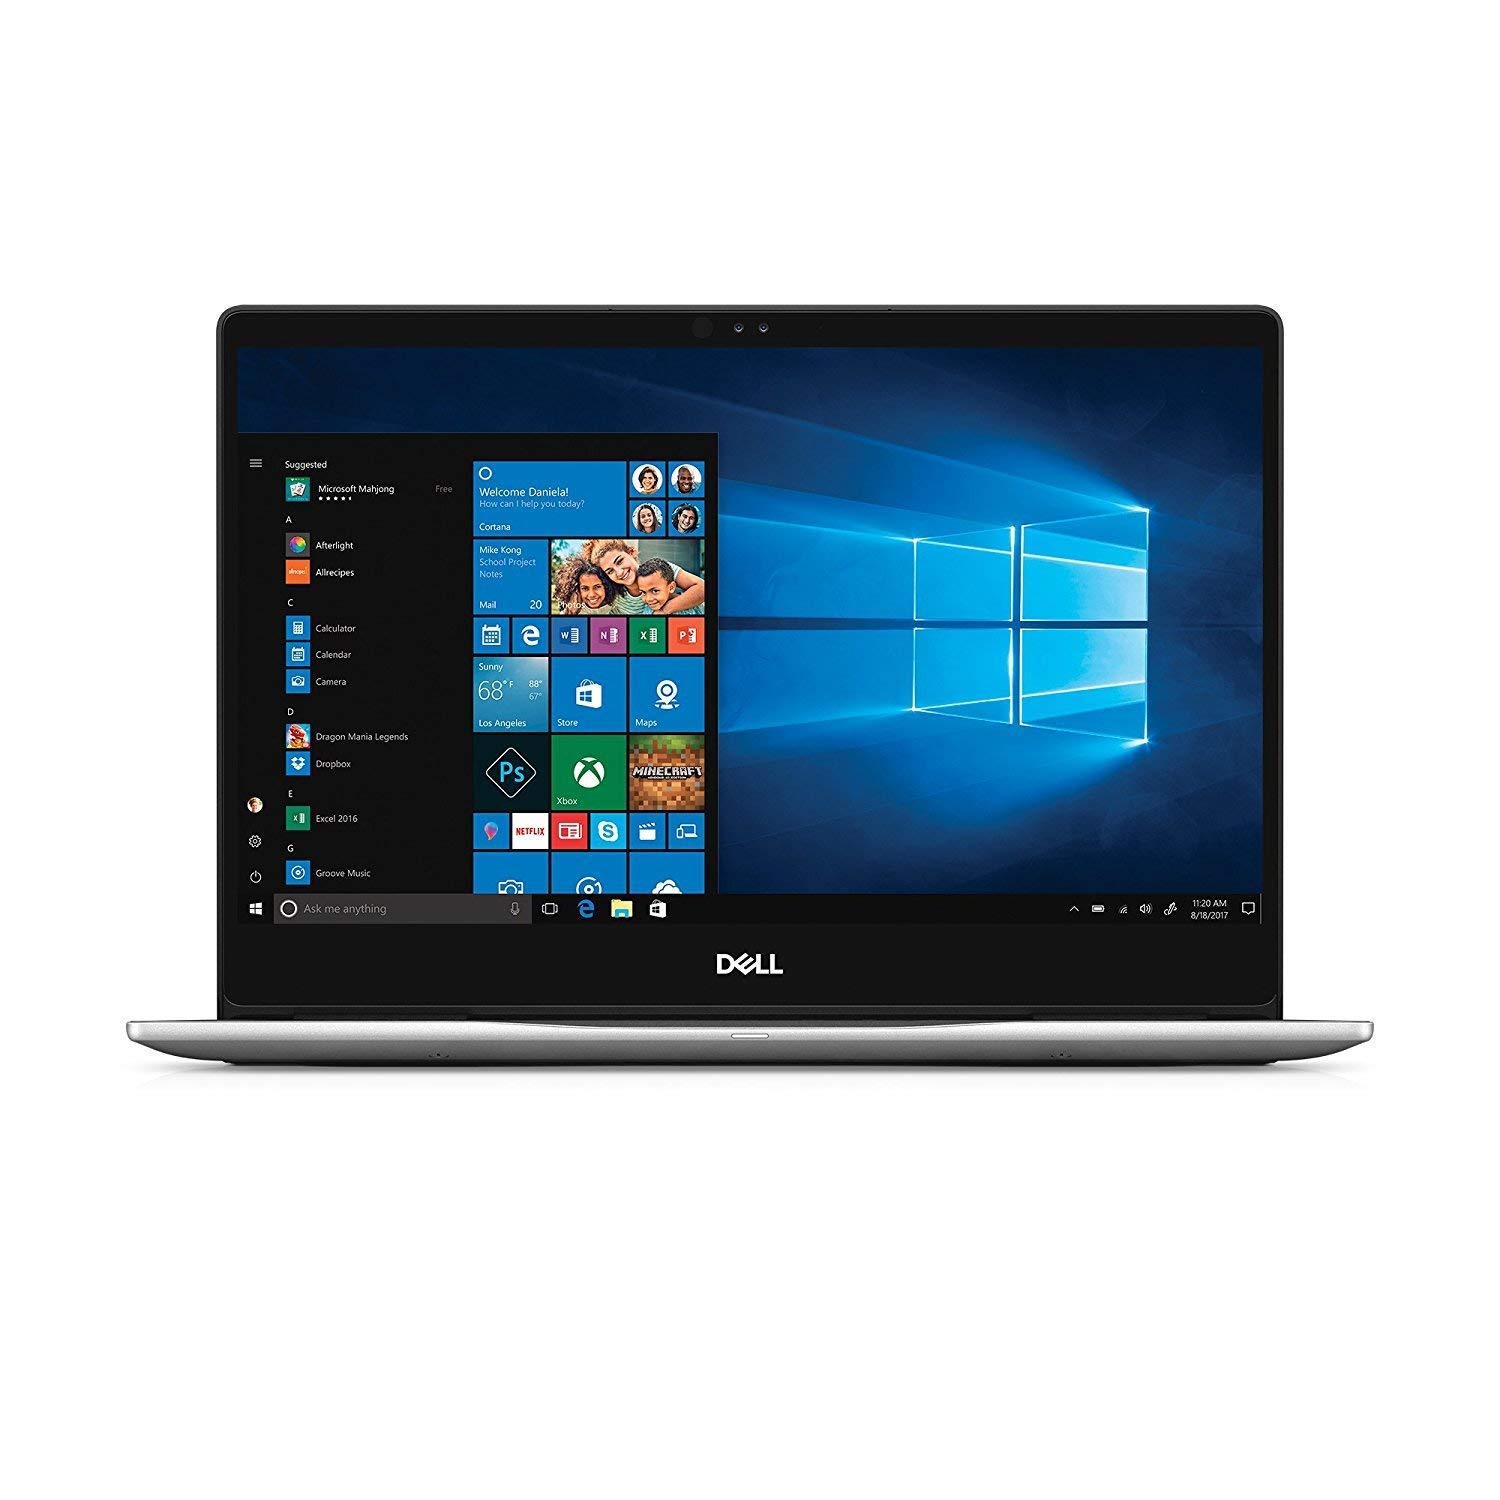 2018 New Dell Inspiron 13 7000 Premium Flagship Laptop, 13.3" FHD IPS Touchscreen, Intel Quad-Core i5-8250U (Beat i7-7500U), 8GB DDR4, 256GB SSD, Backlit Keyboard, WiFi, Bluetooth, HDMI, Windows 10